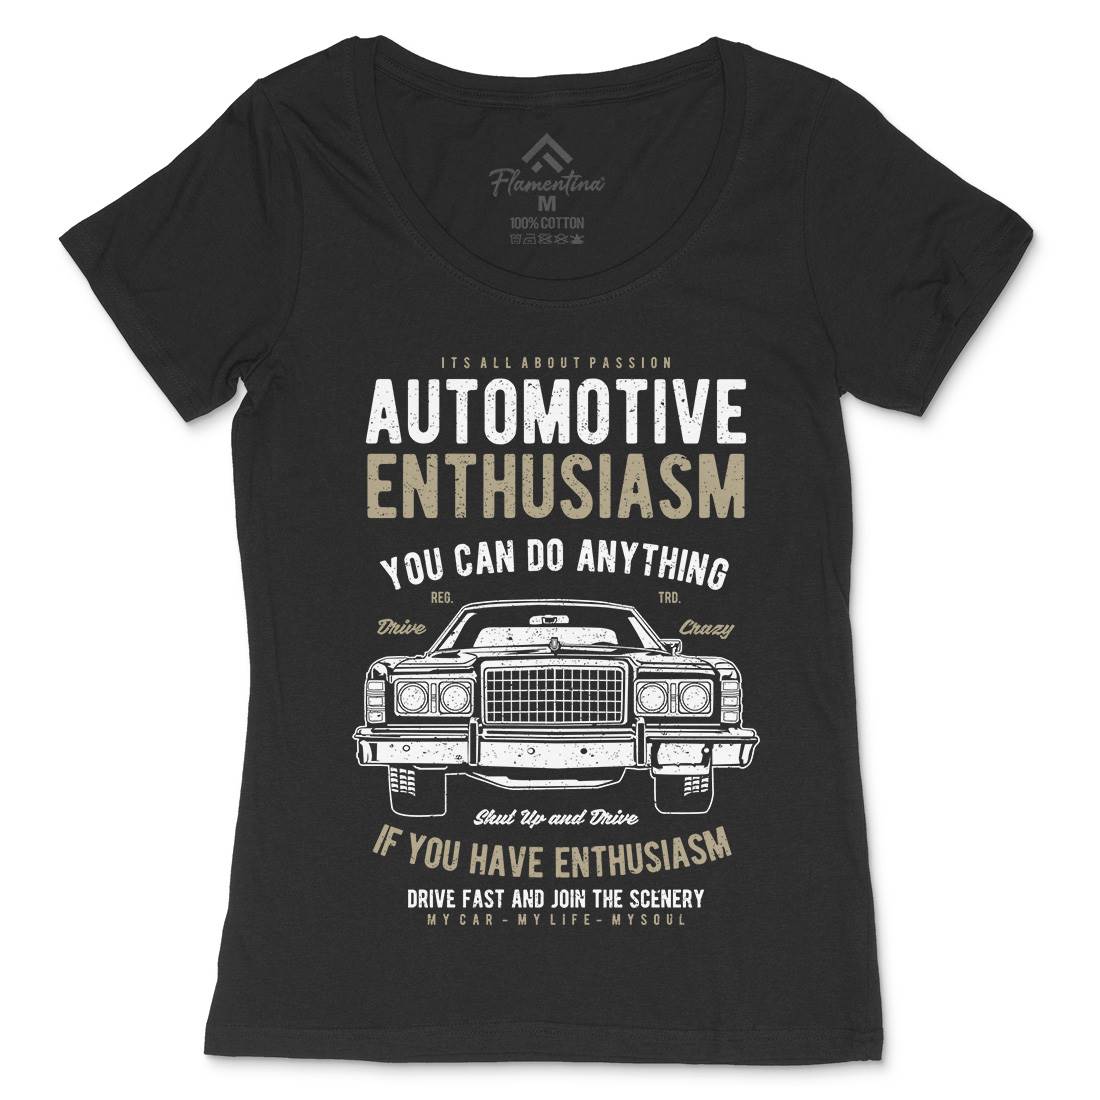 Automotive Enthusiasm Womens Scoop Neck T-Shirt Cars A614